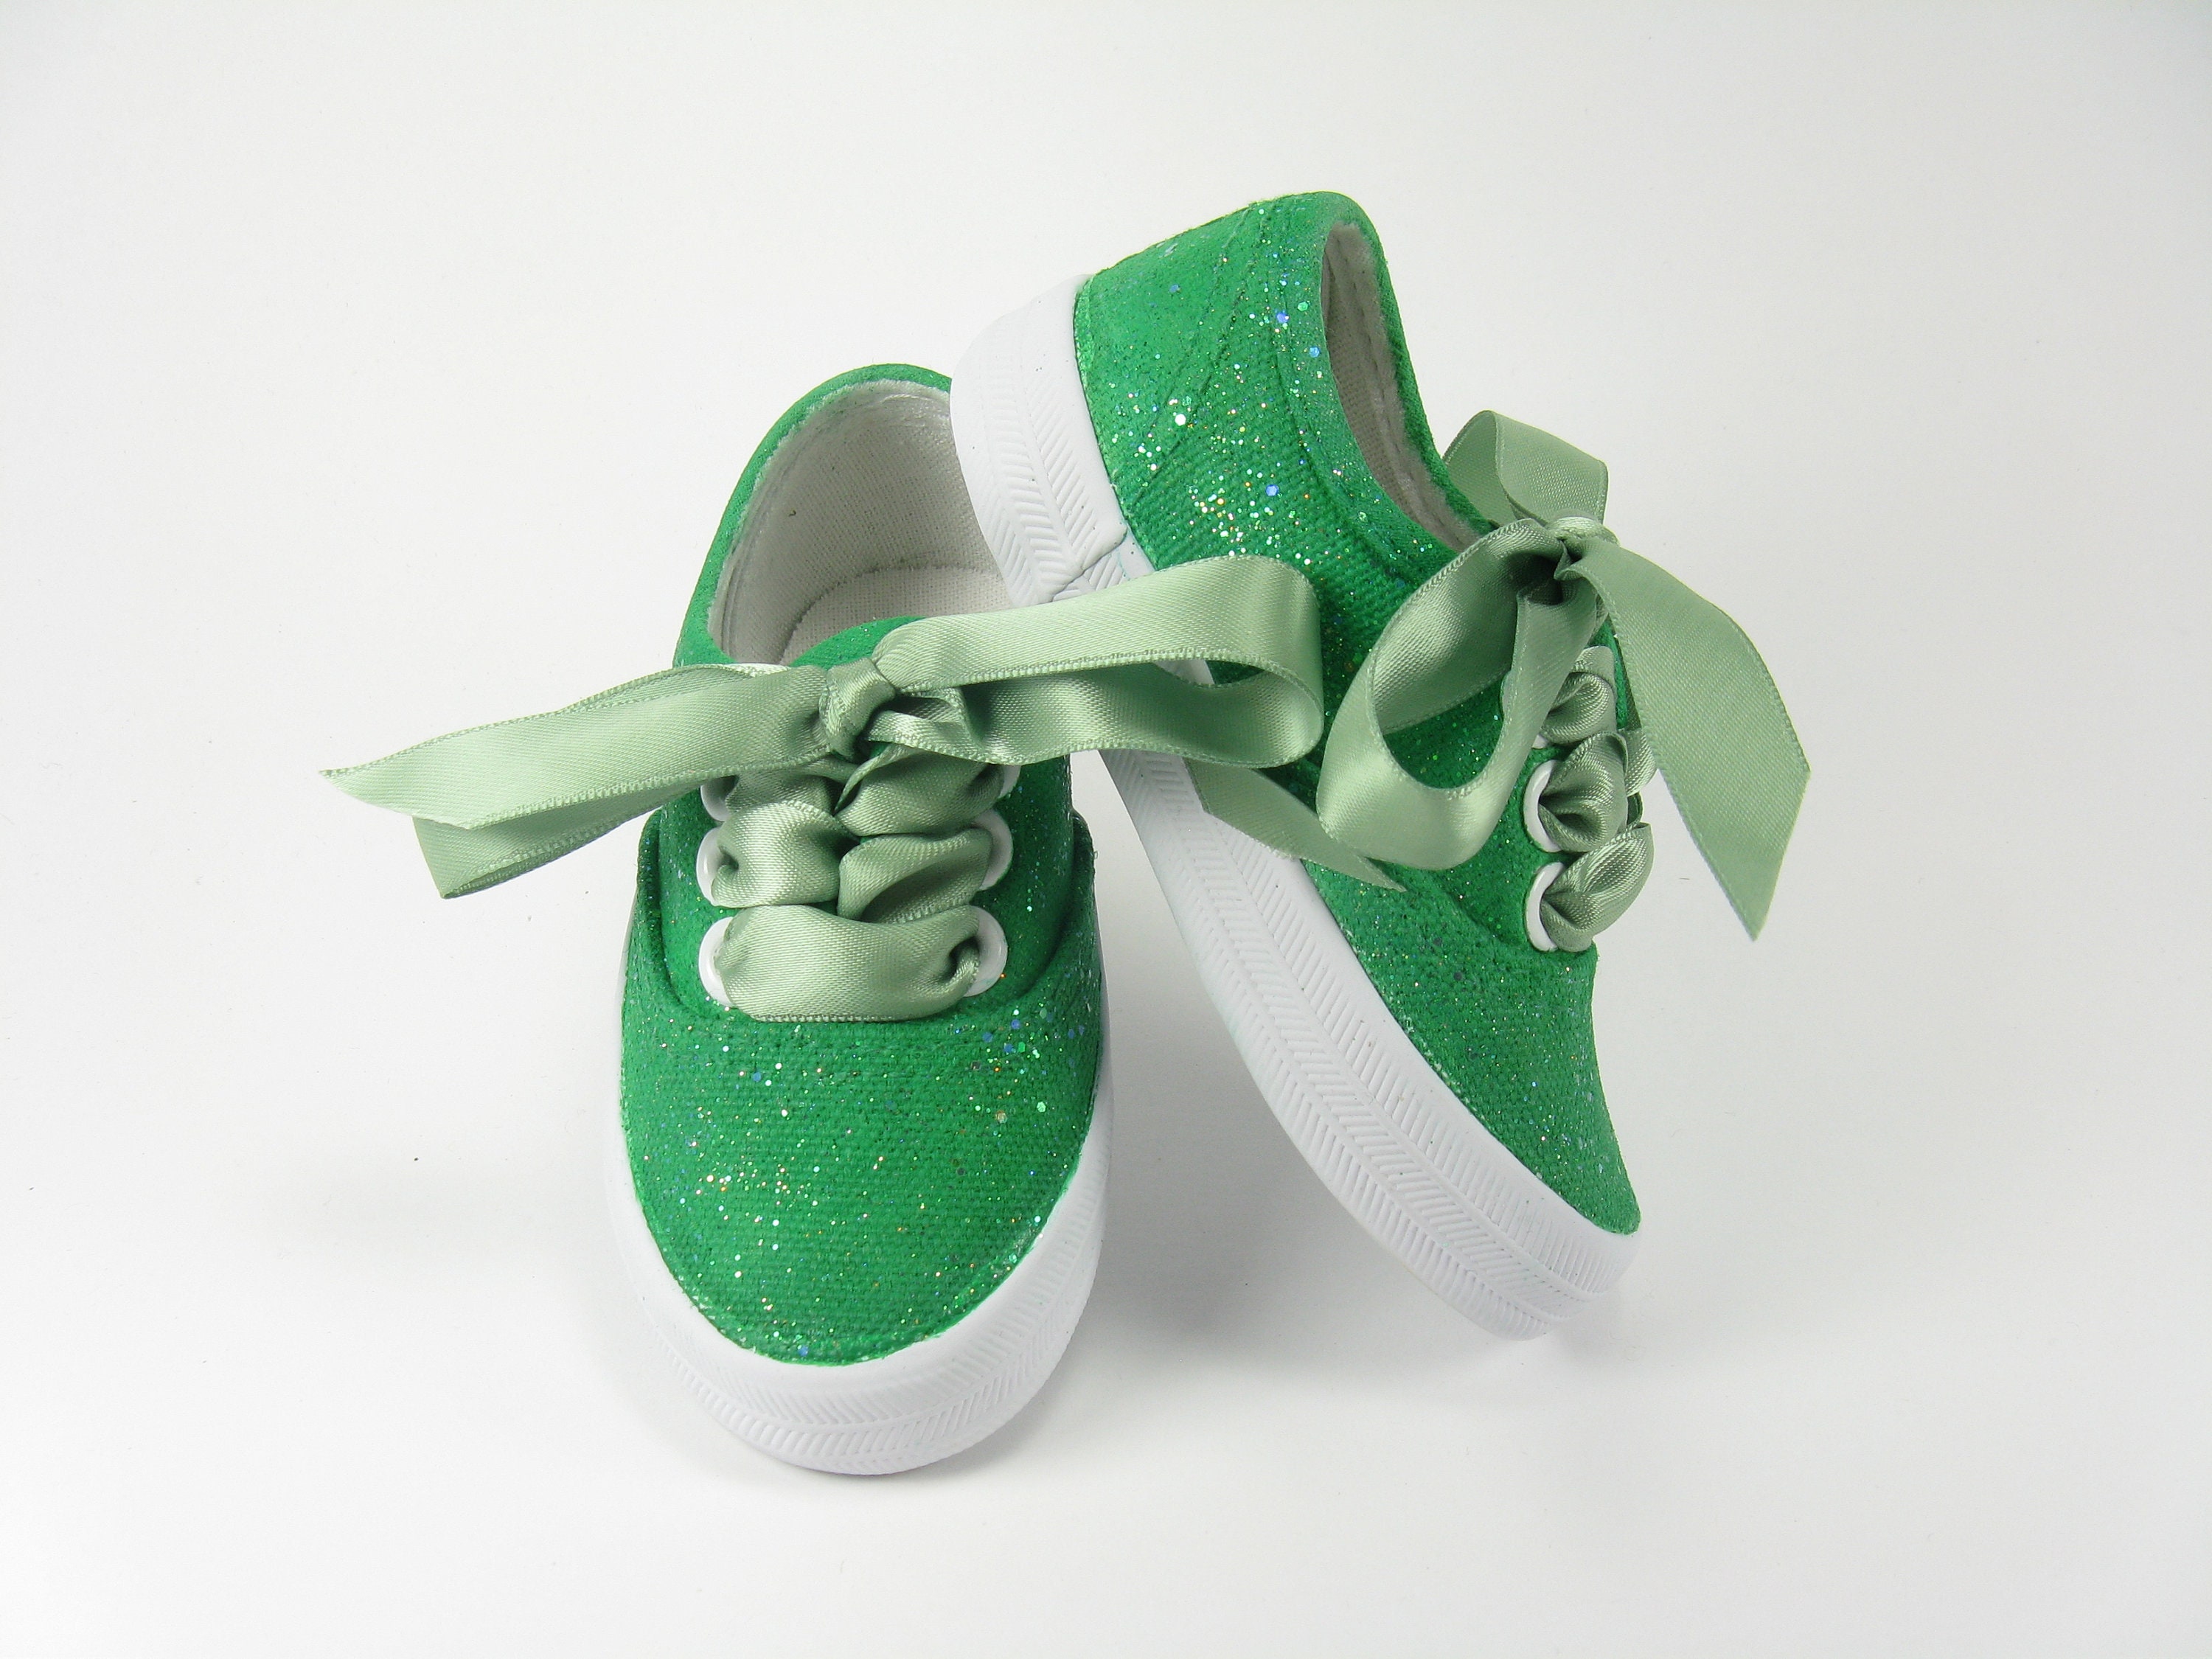 Schoenen Meisjesschoenen Sneakers & Sportschoenen Sparkled Sneakers Hand Painted for Baby or Toddler Gold Glitter Shoes 